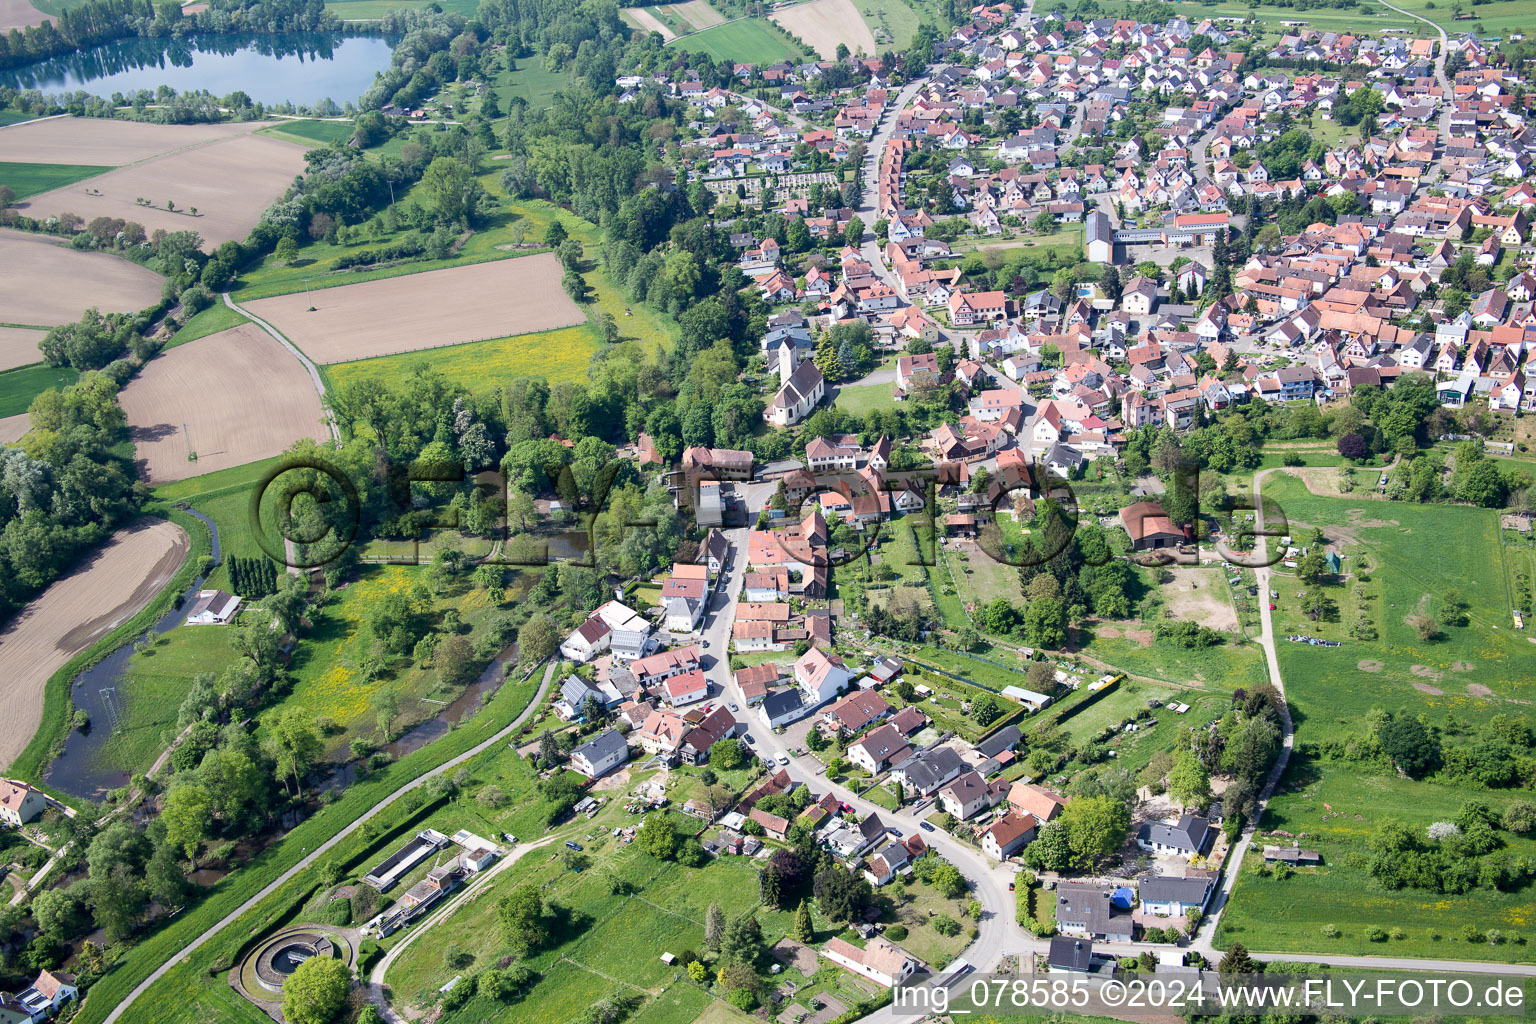 Village view in the district Neulauterburg in Berg (Pfalz) in the state Rhineland-Palatinate